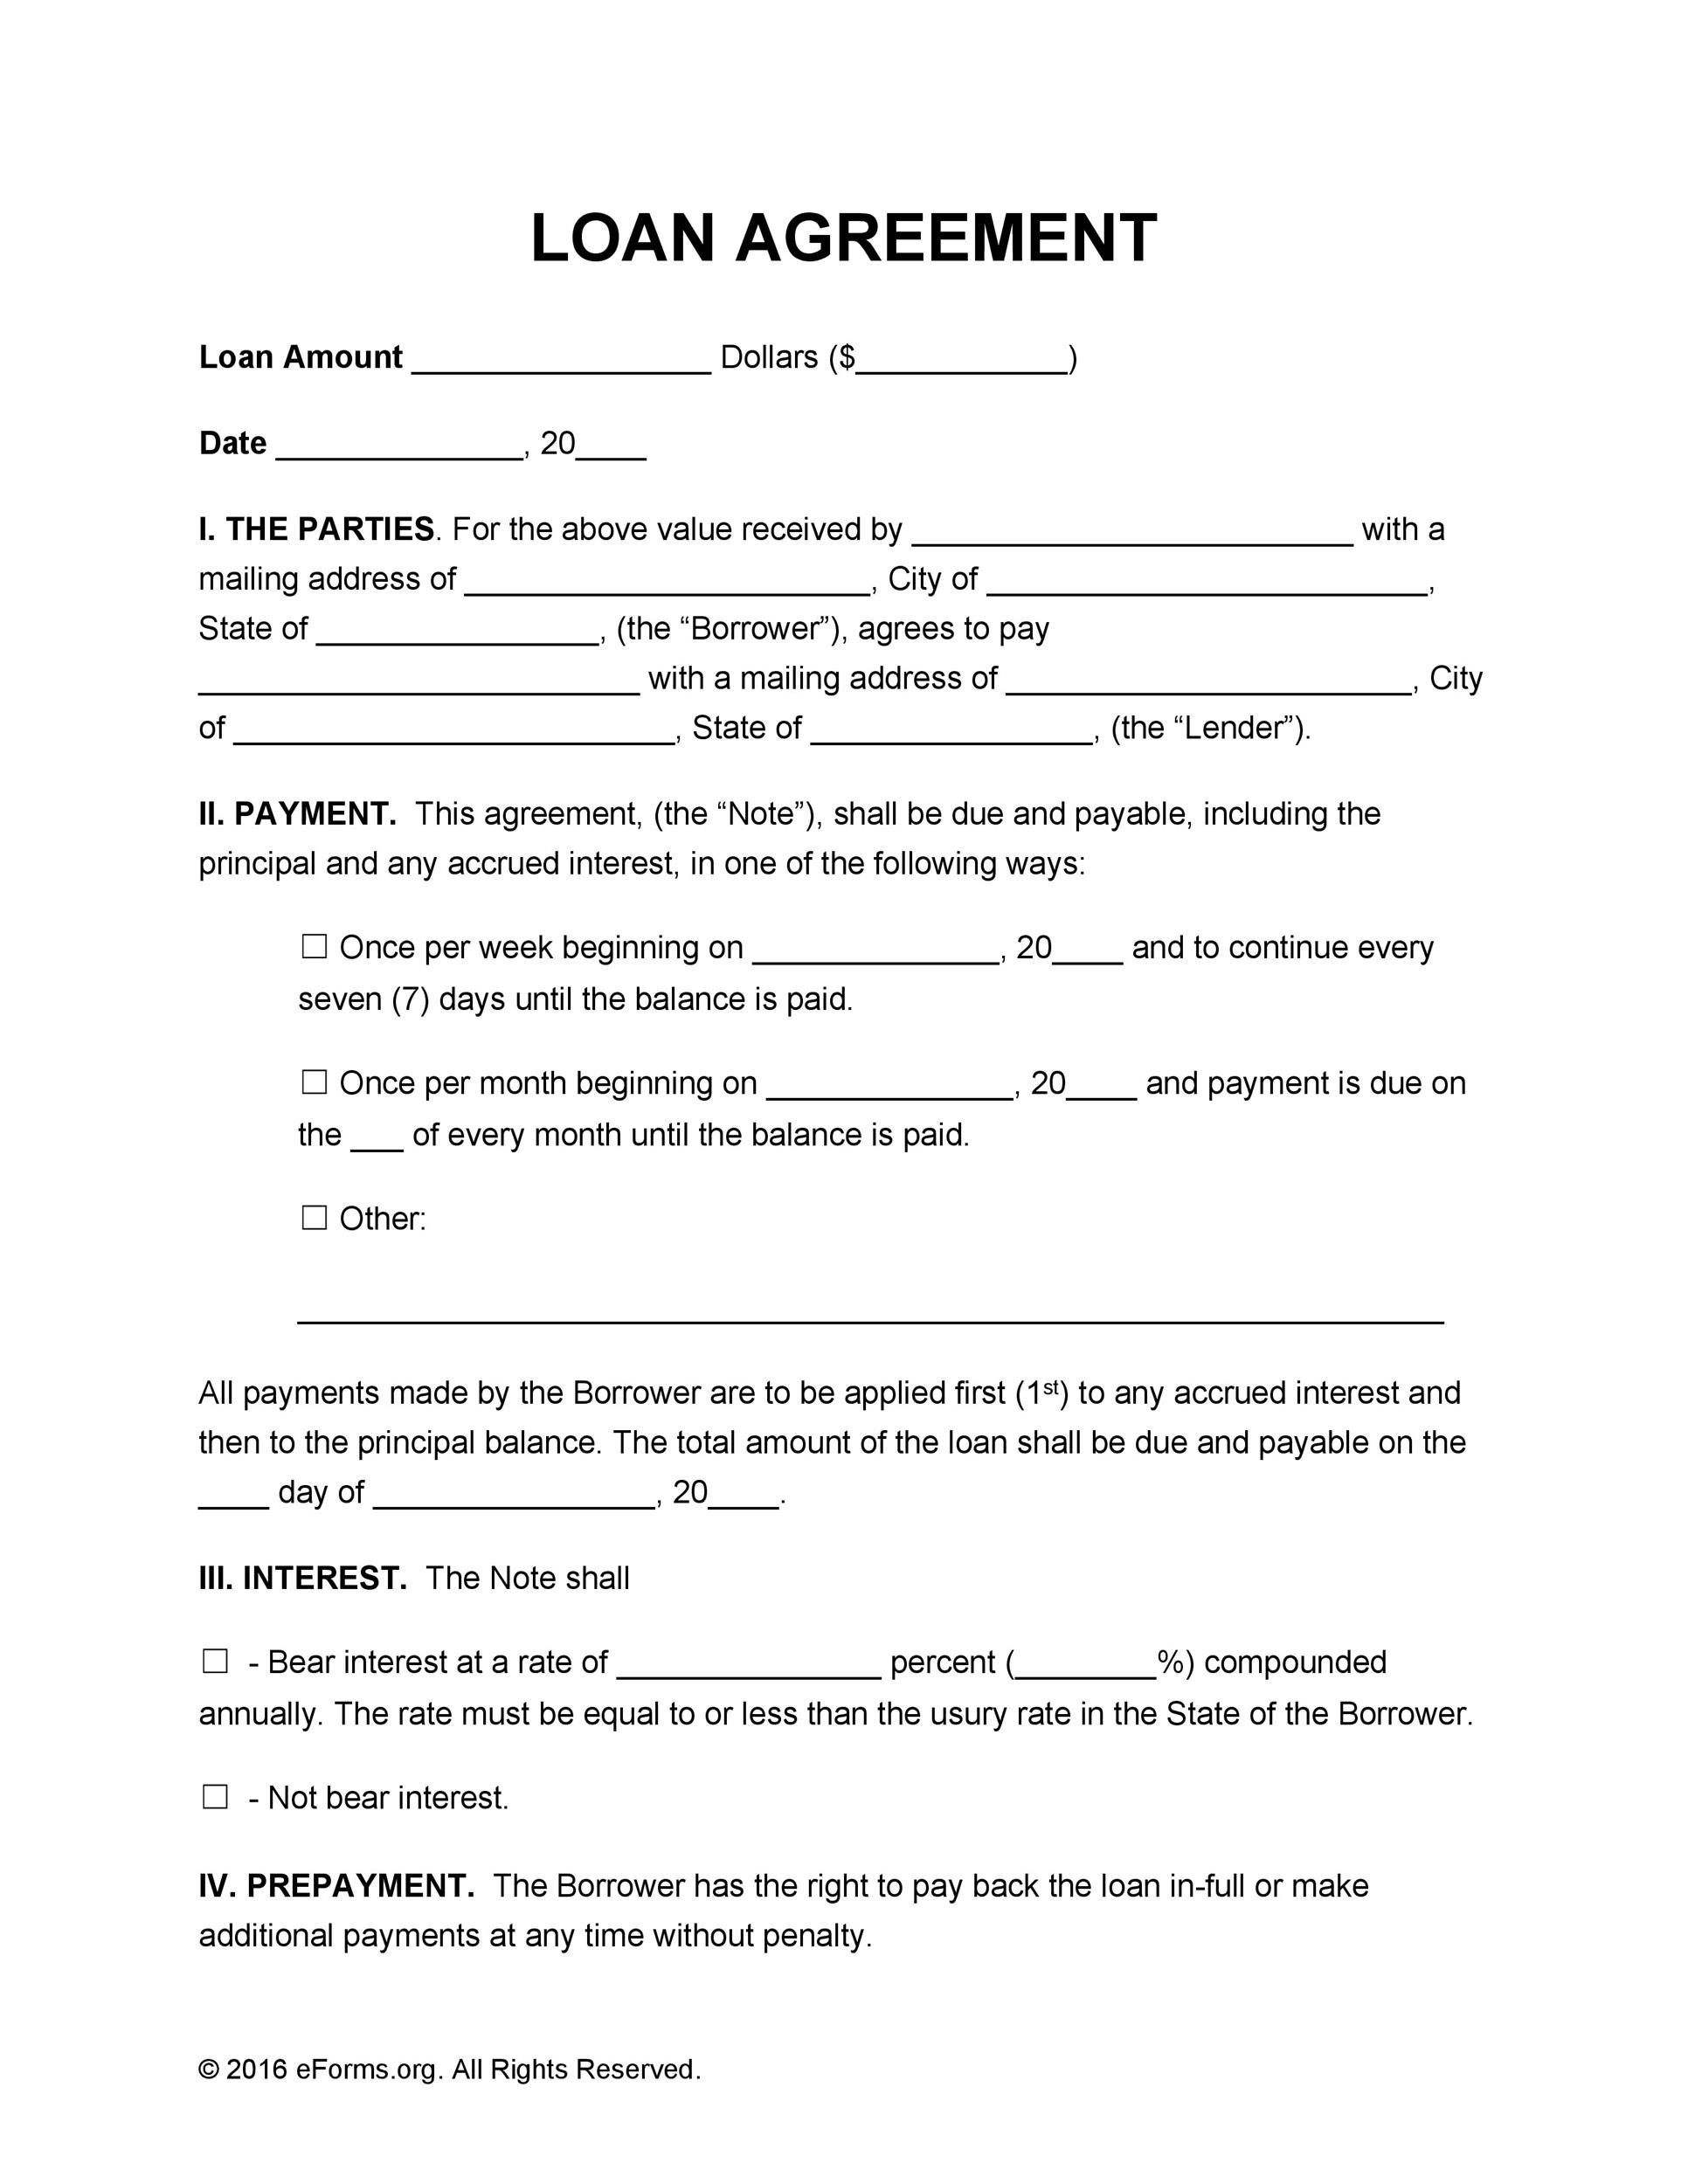 Free loan agreement template 06